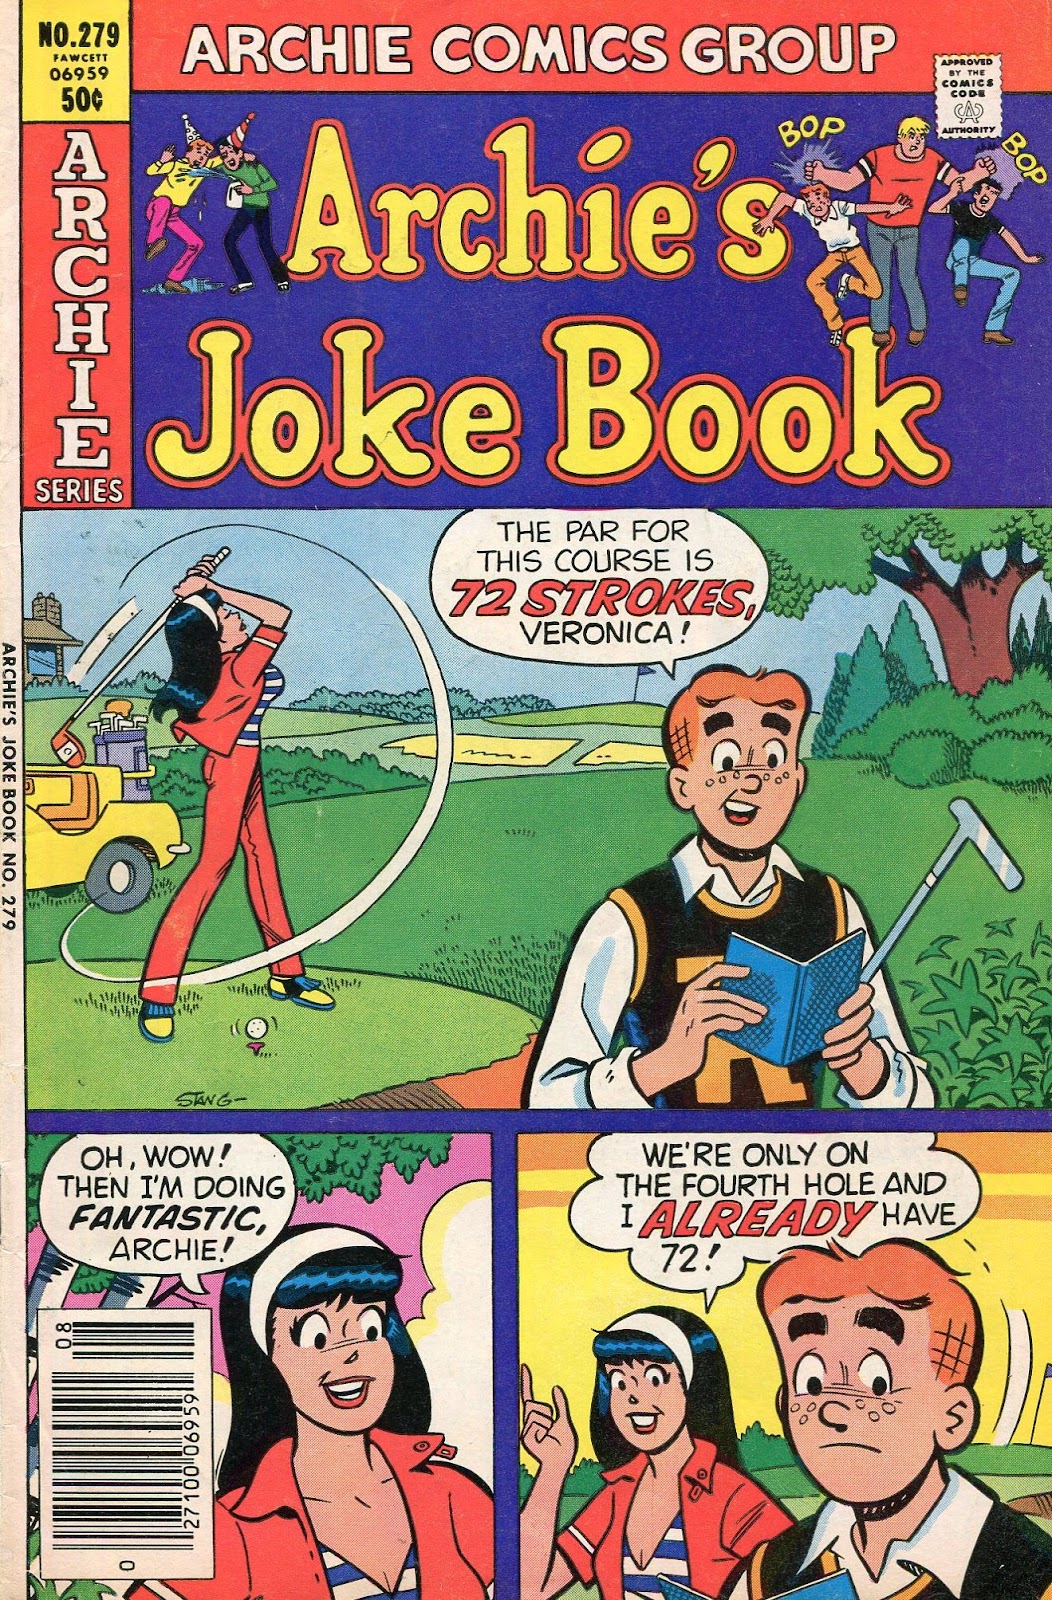 Archie's Joke Book Magazine issue 279 - Page 1